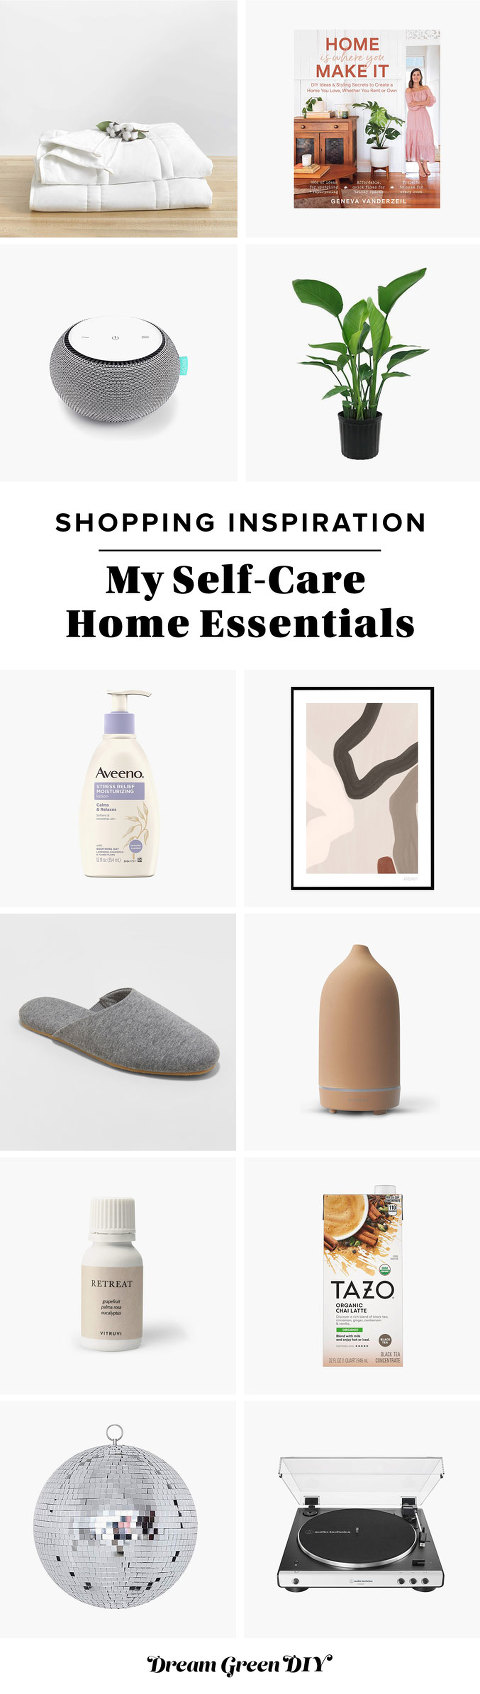 My Self-Care Home Essentials